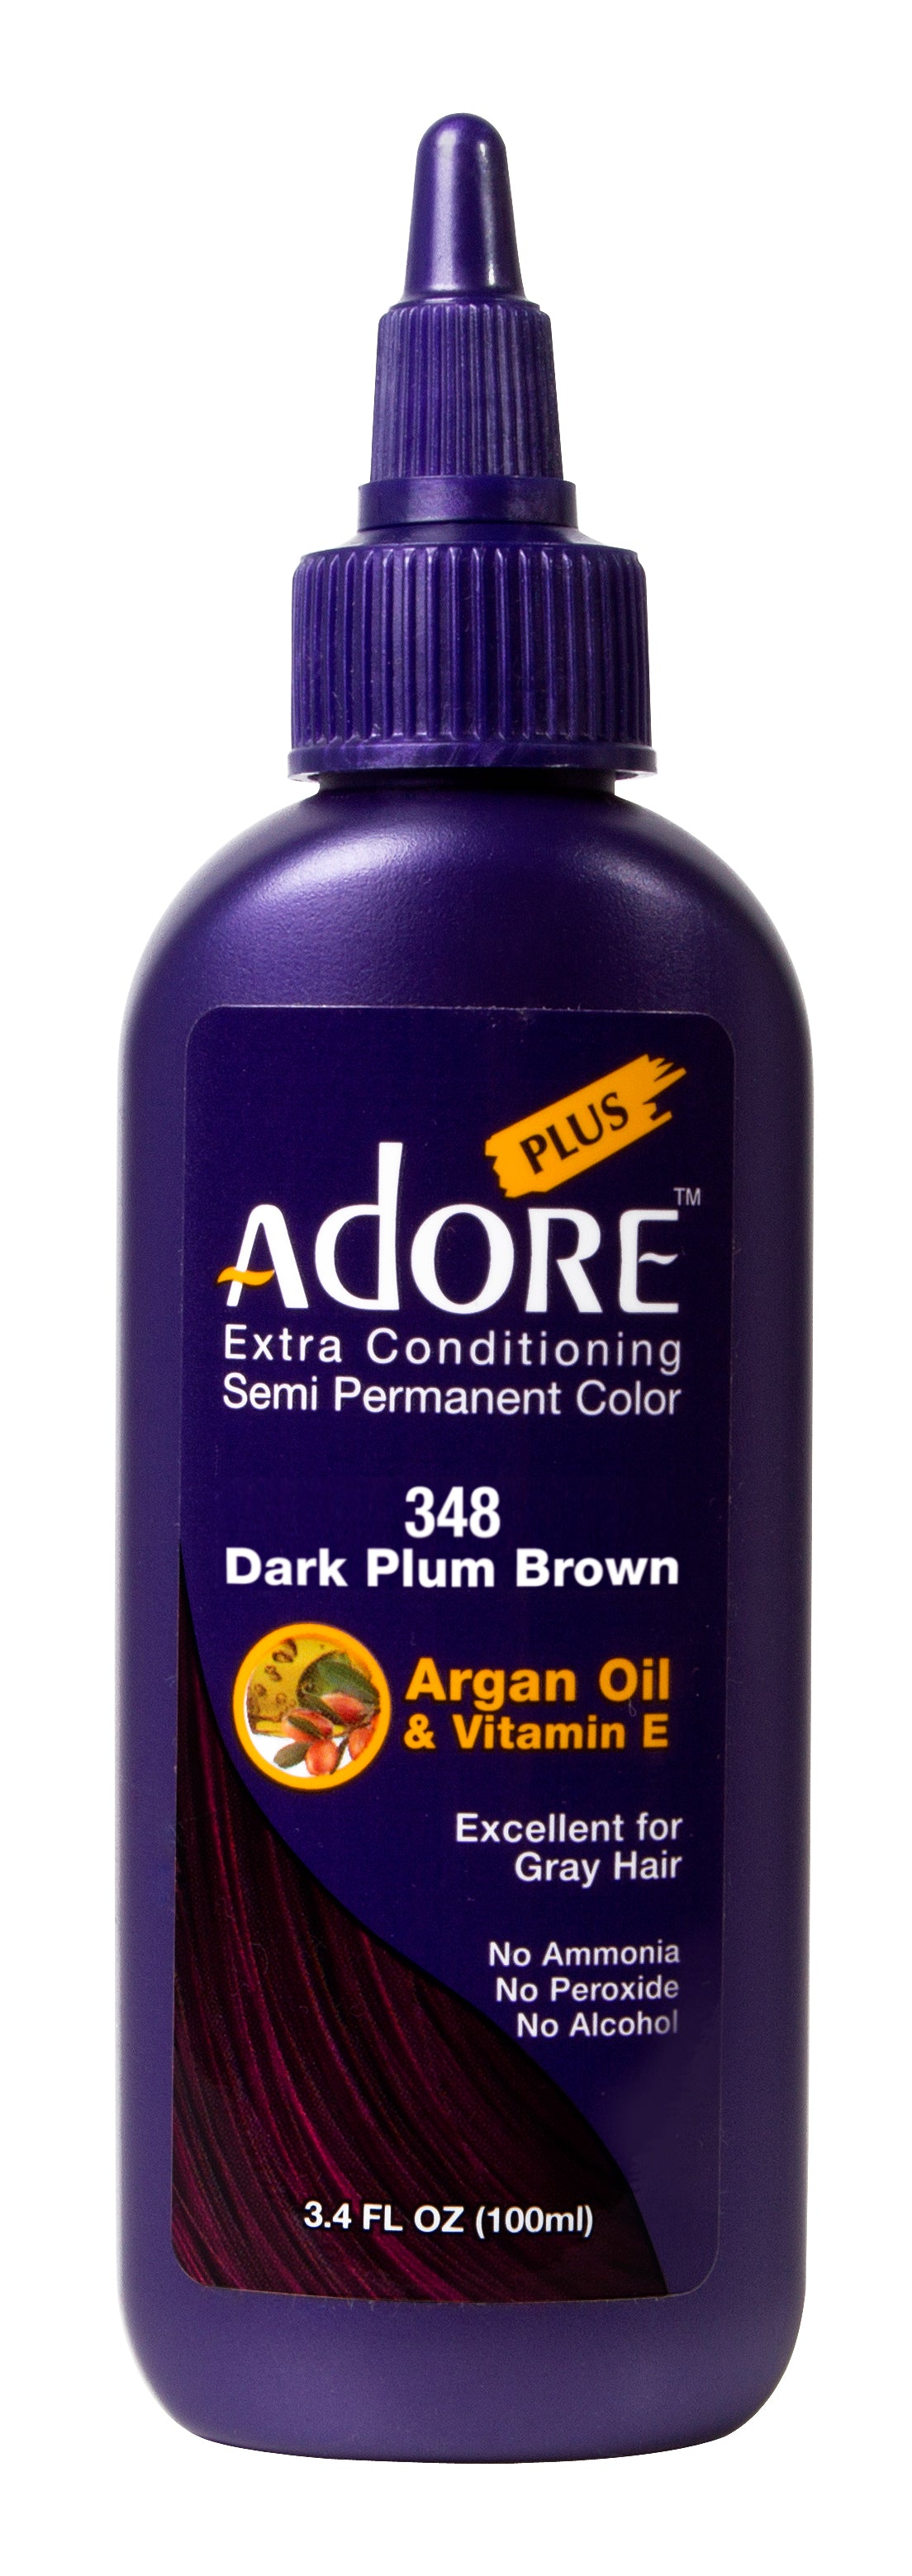 Adore Dark Plum Brown #348